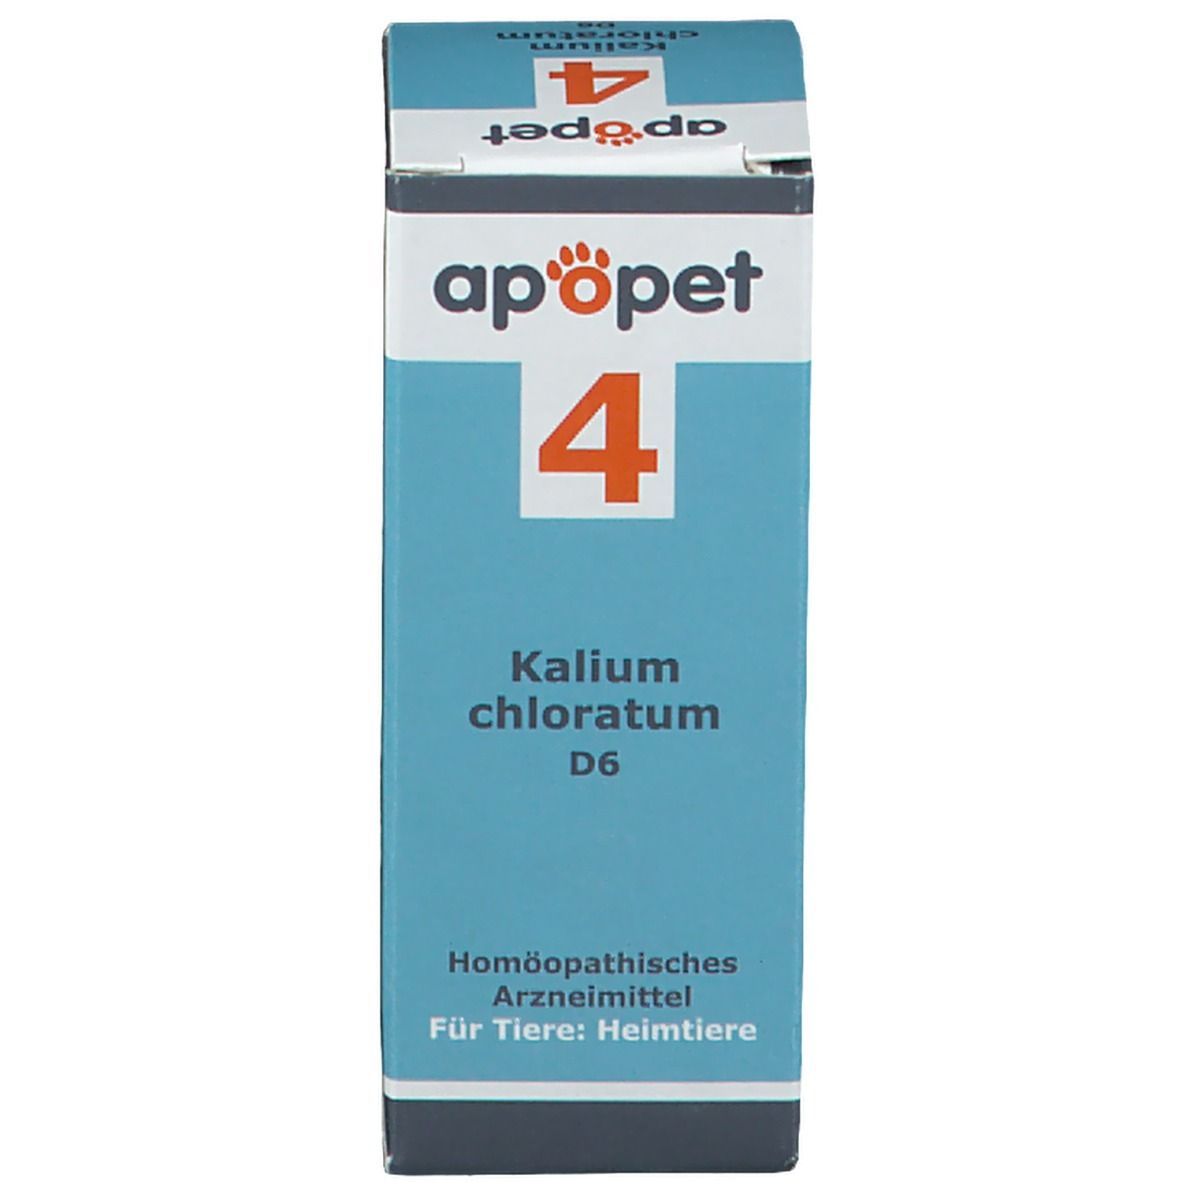 apopet® Schüßler Salz Nr. 4 Kalium chloratum D6 ad us. vet.